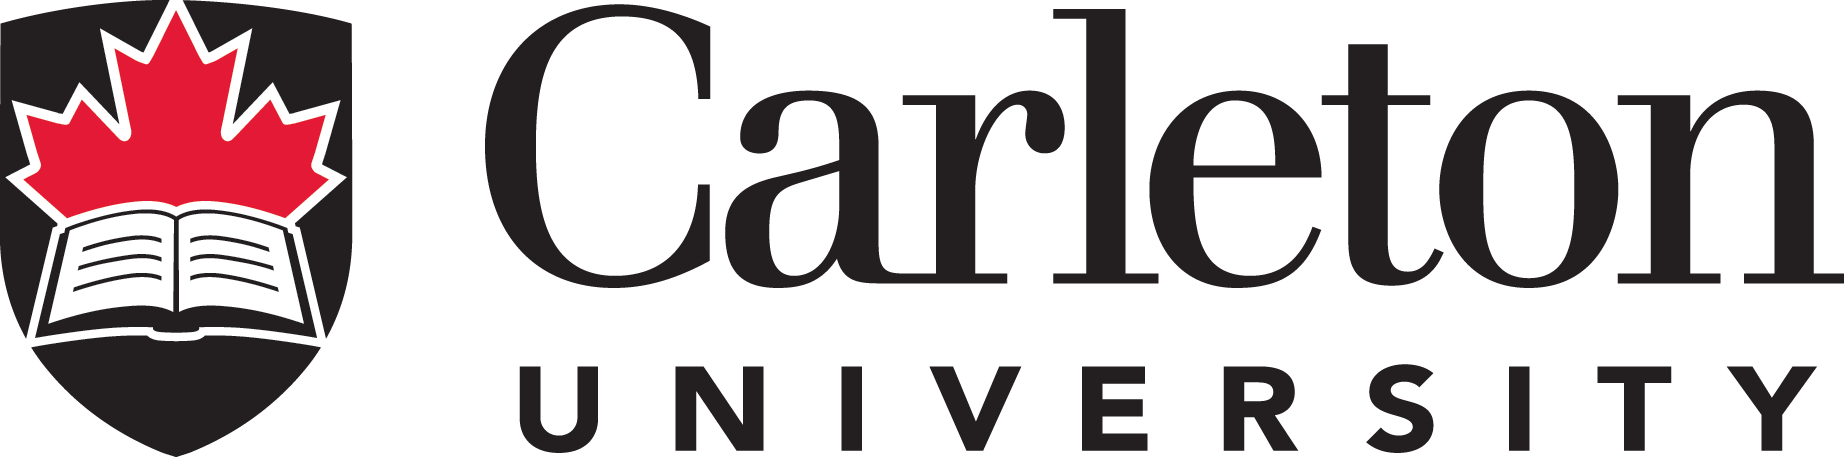 Logo de l’Université Carleton